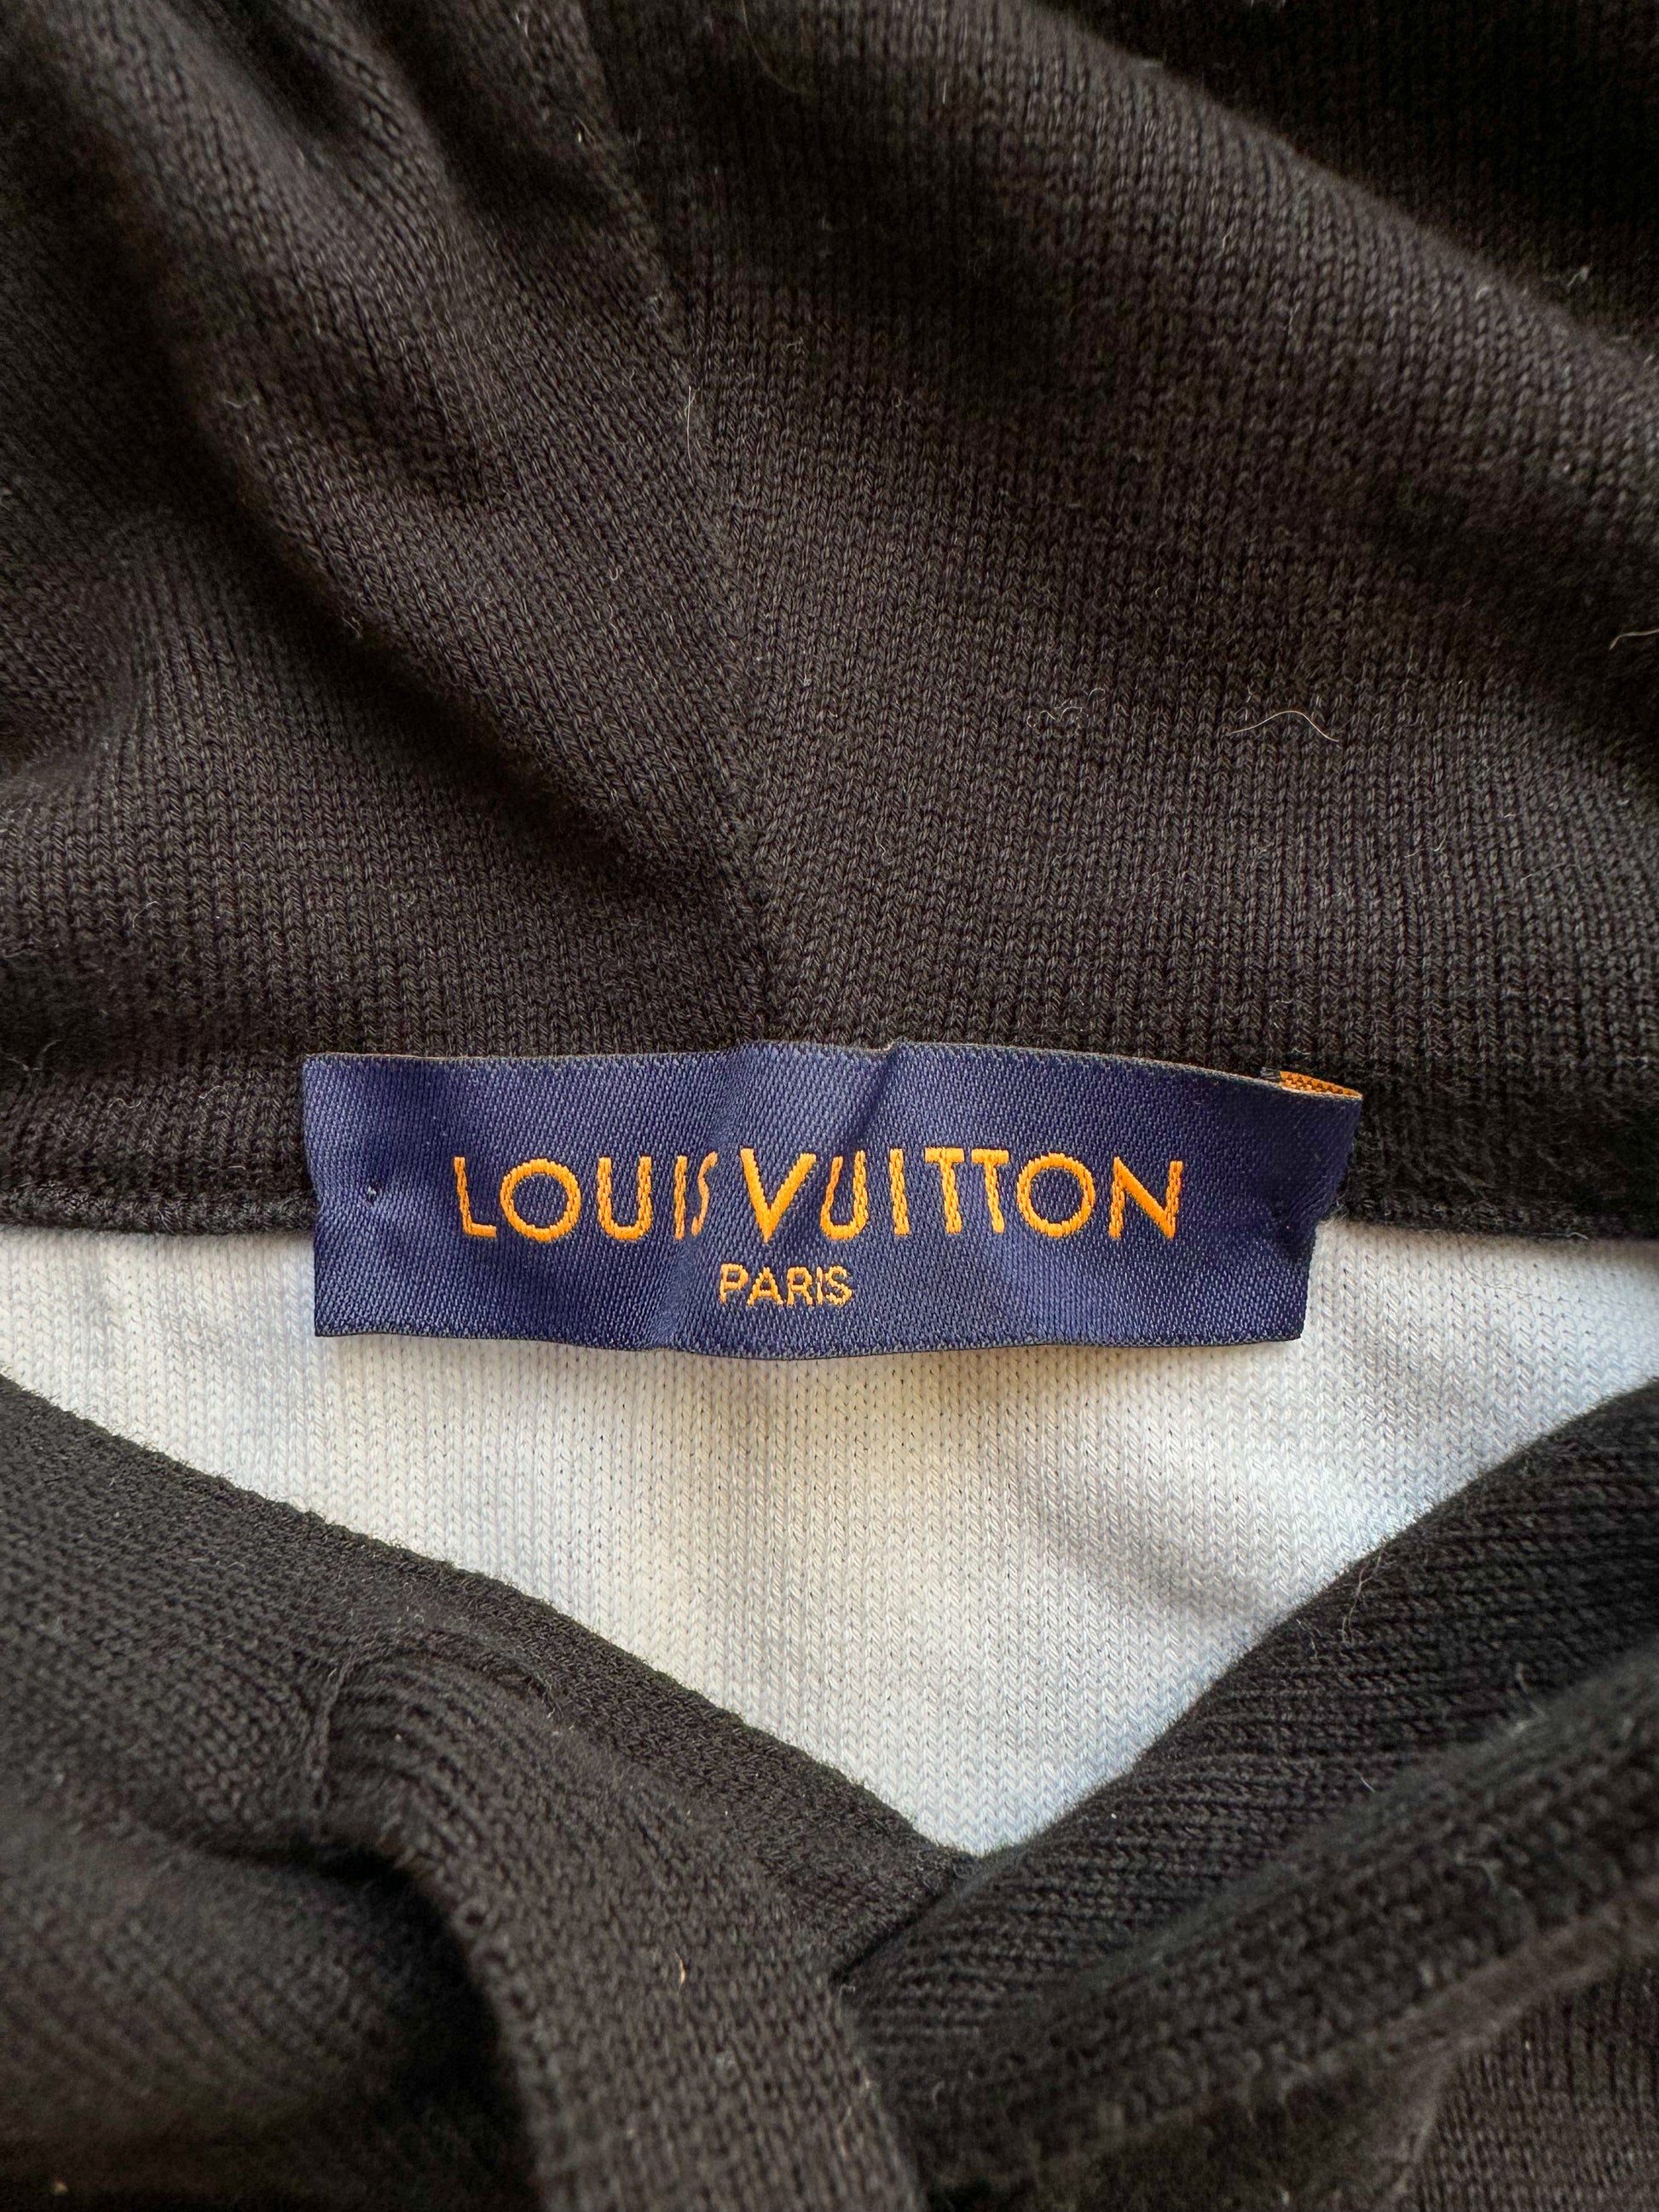 Louis Vuitton Monogram Gradient Hoodie